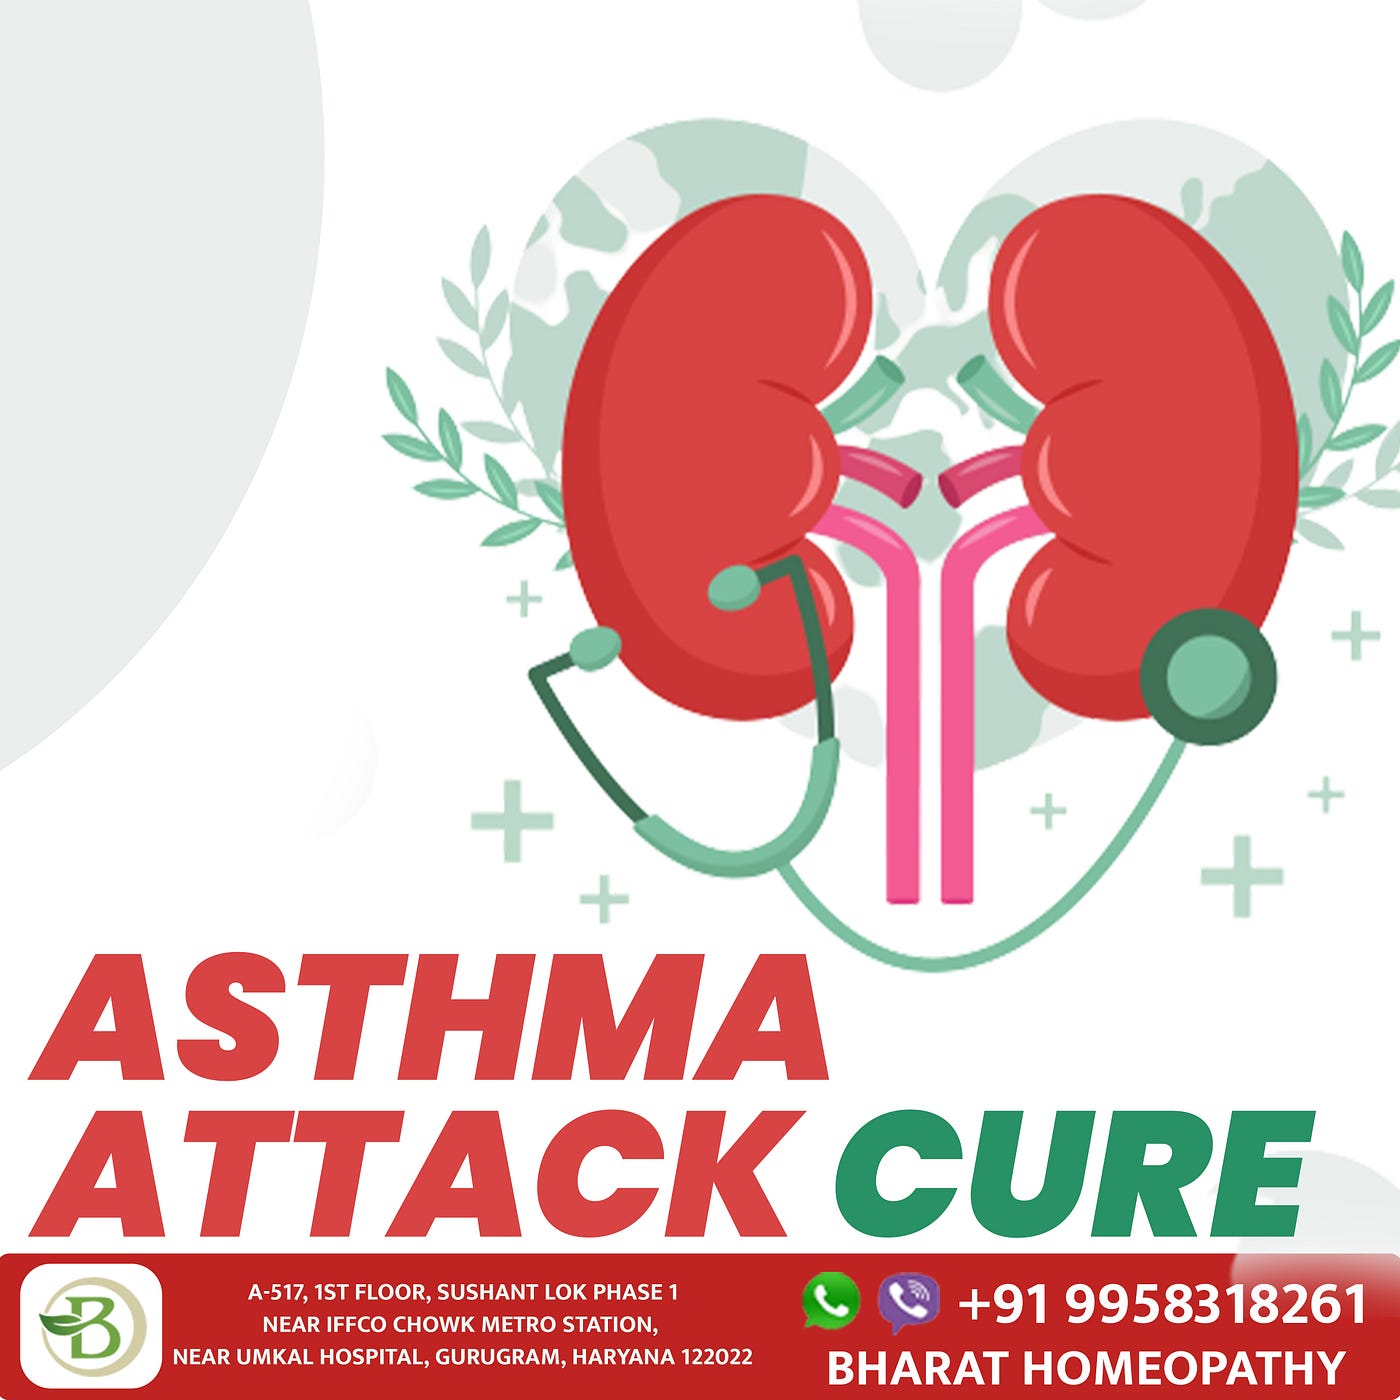 Asthma treatment by homeopathy. Asthma treatment by homeopathy, by bharat  homeopathy